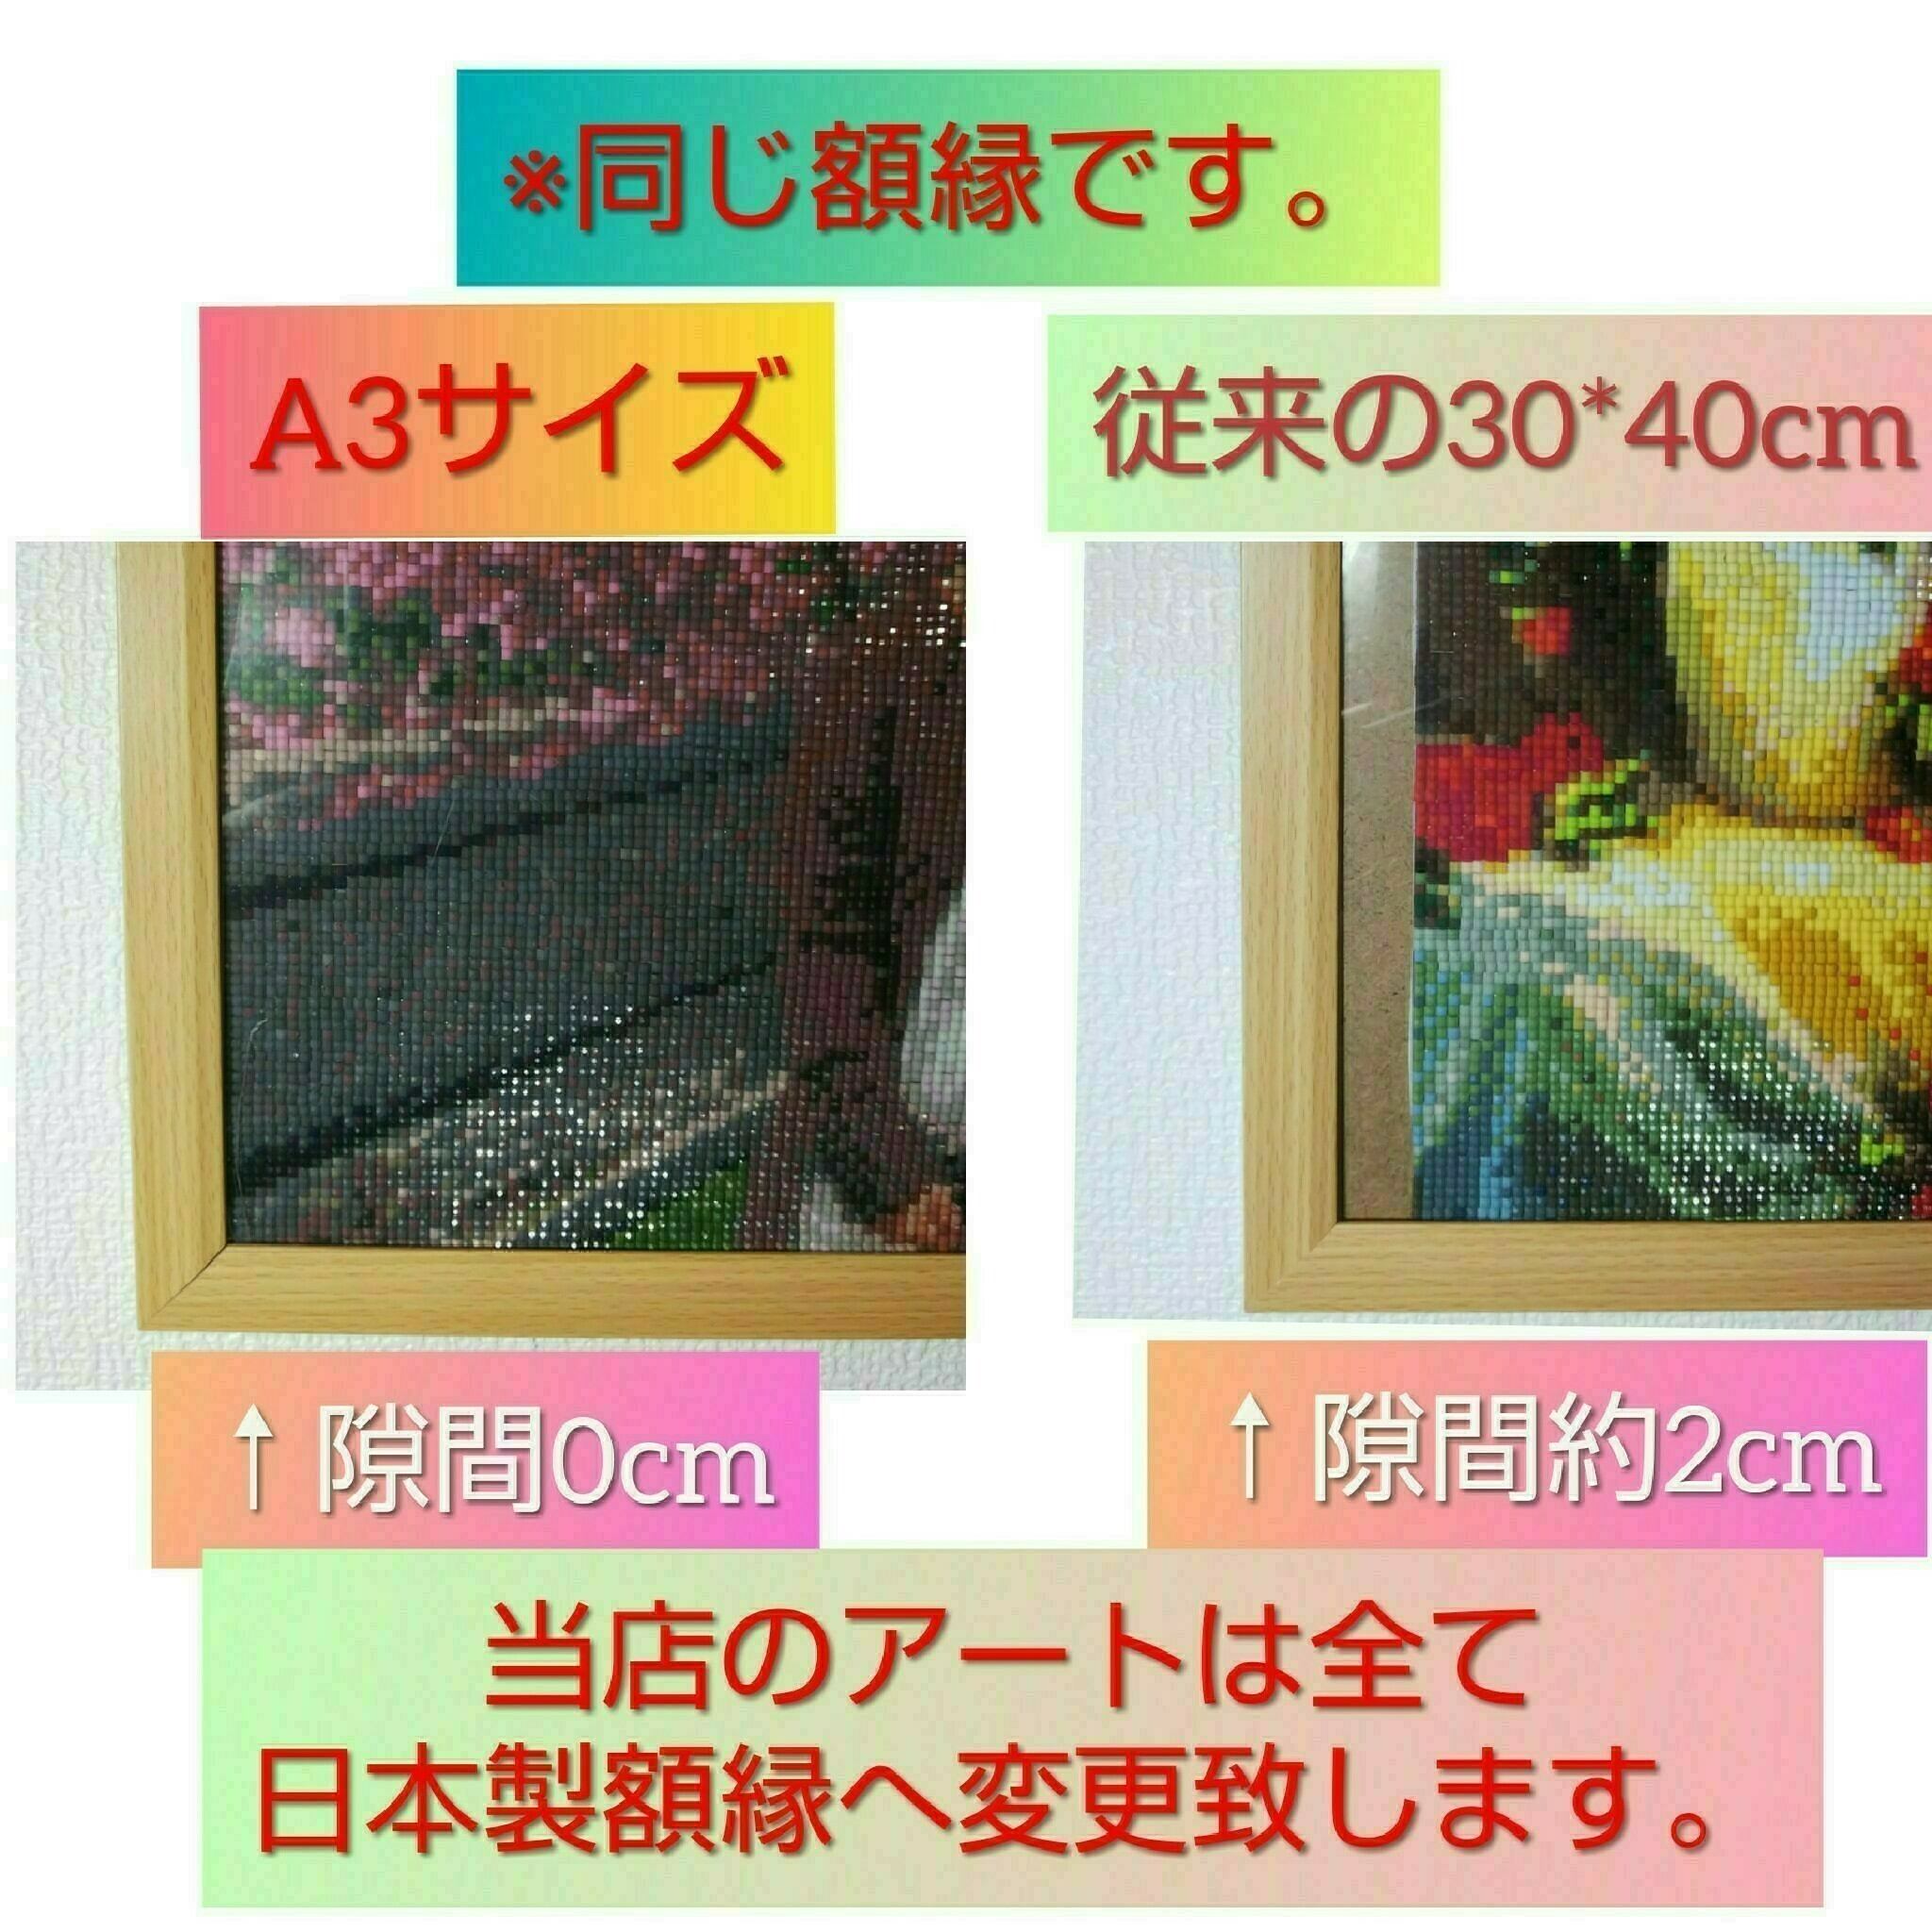 A3サイズ 四角ビーズ【runa-561】ダイヤモンドアート